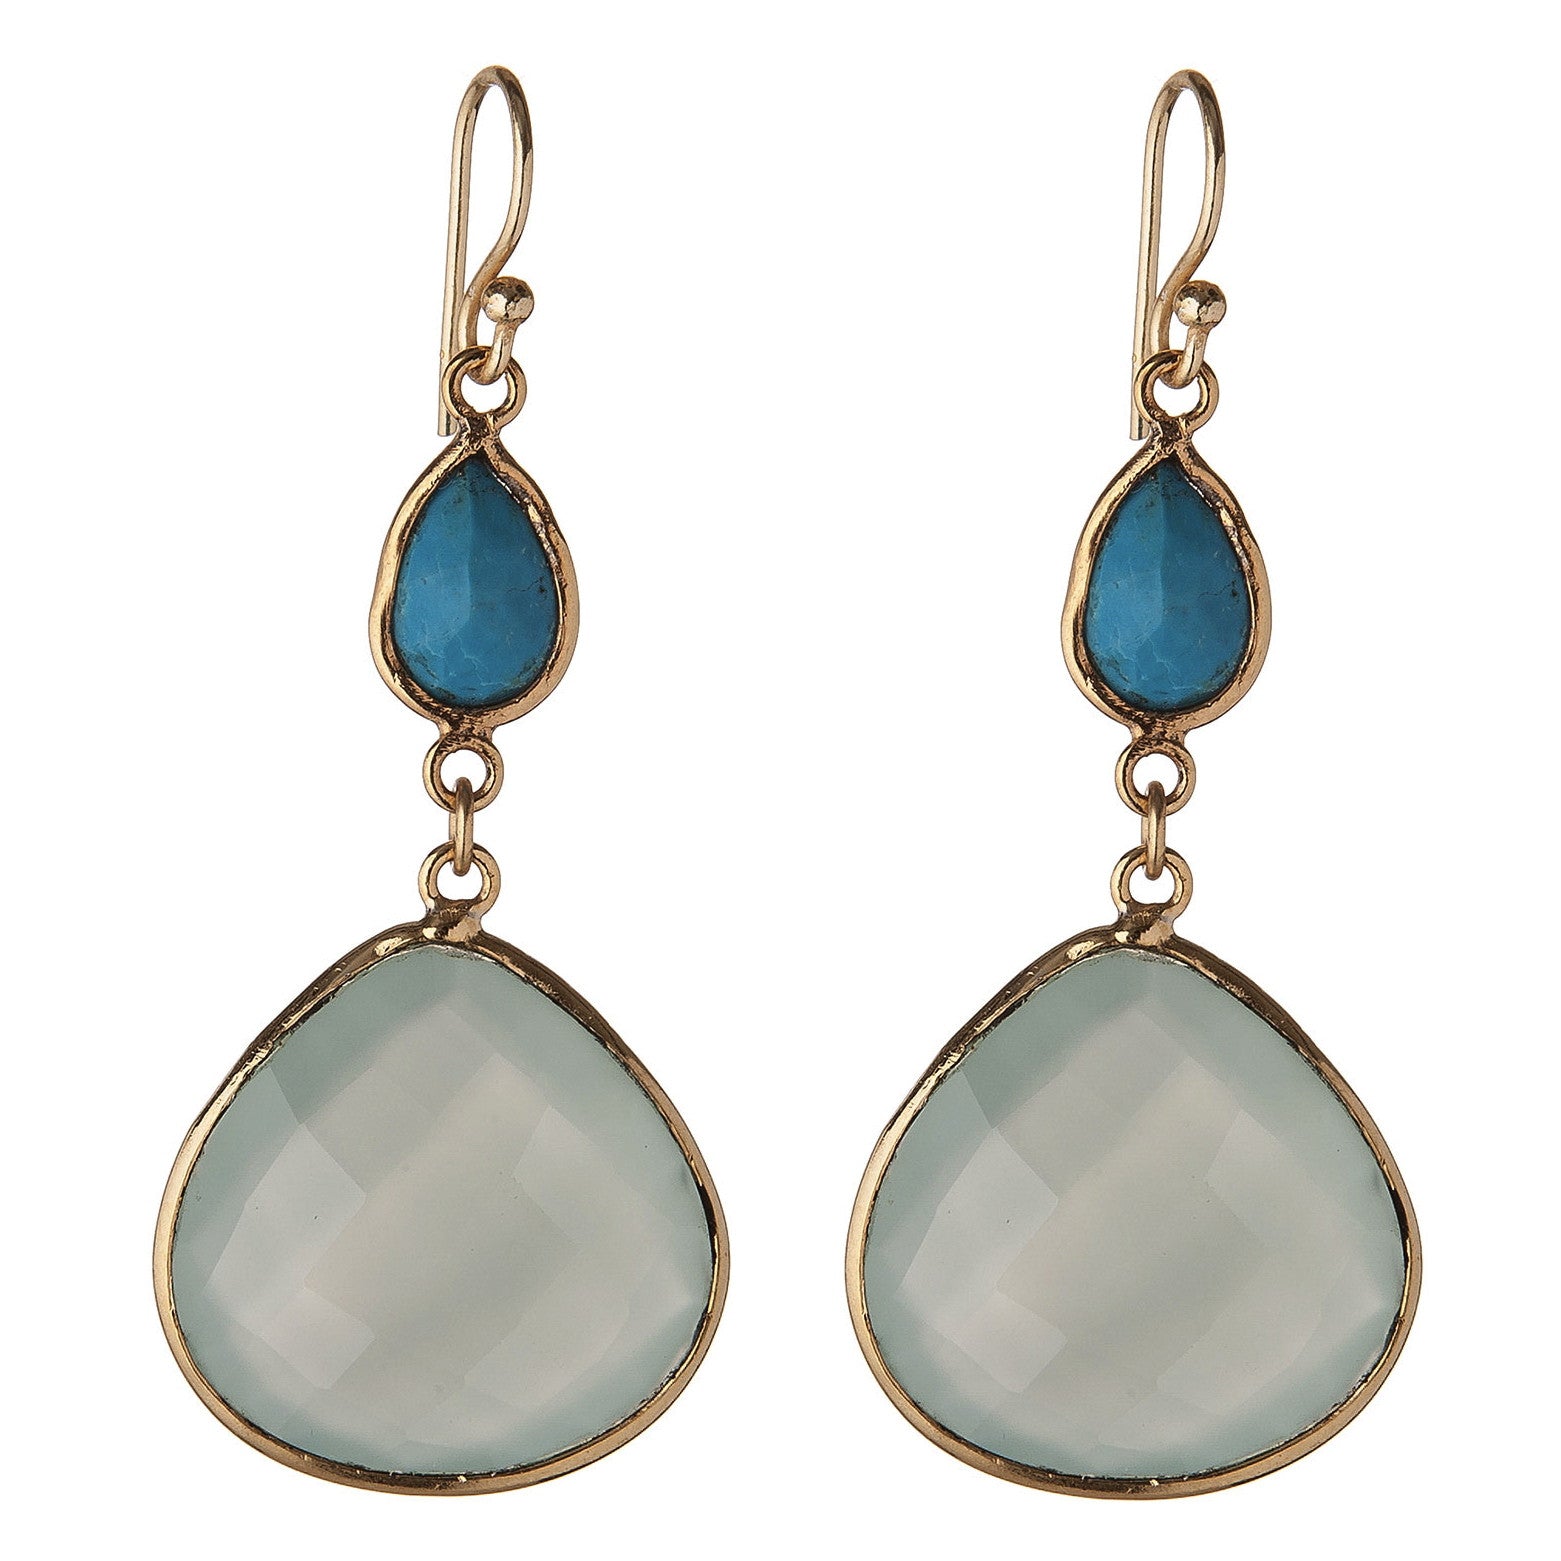 Aqua & Turquoise Earrings - Indigo Blue Trading